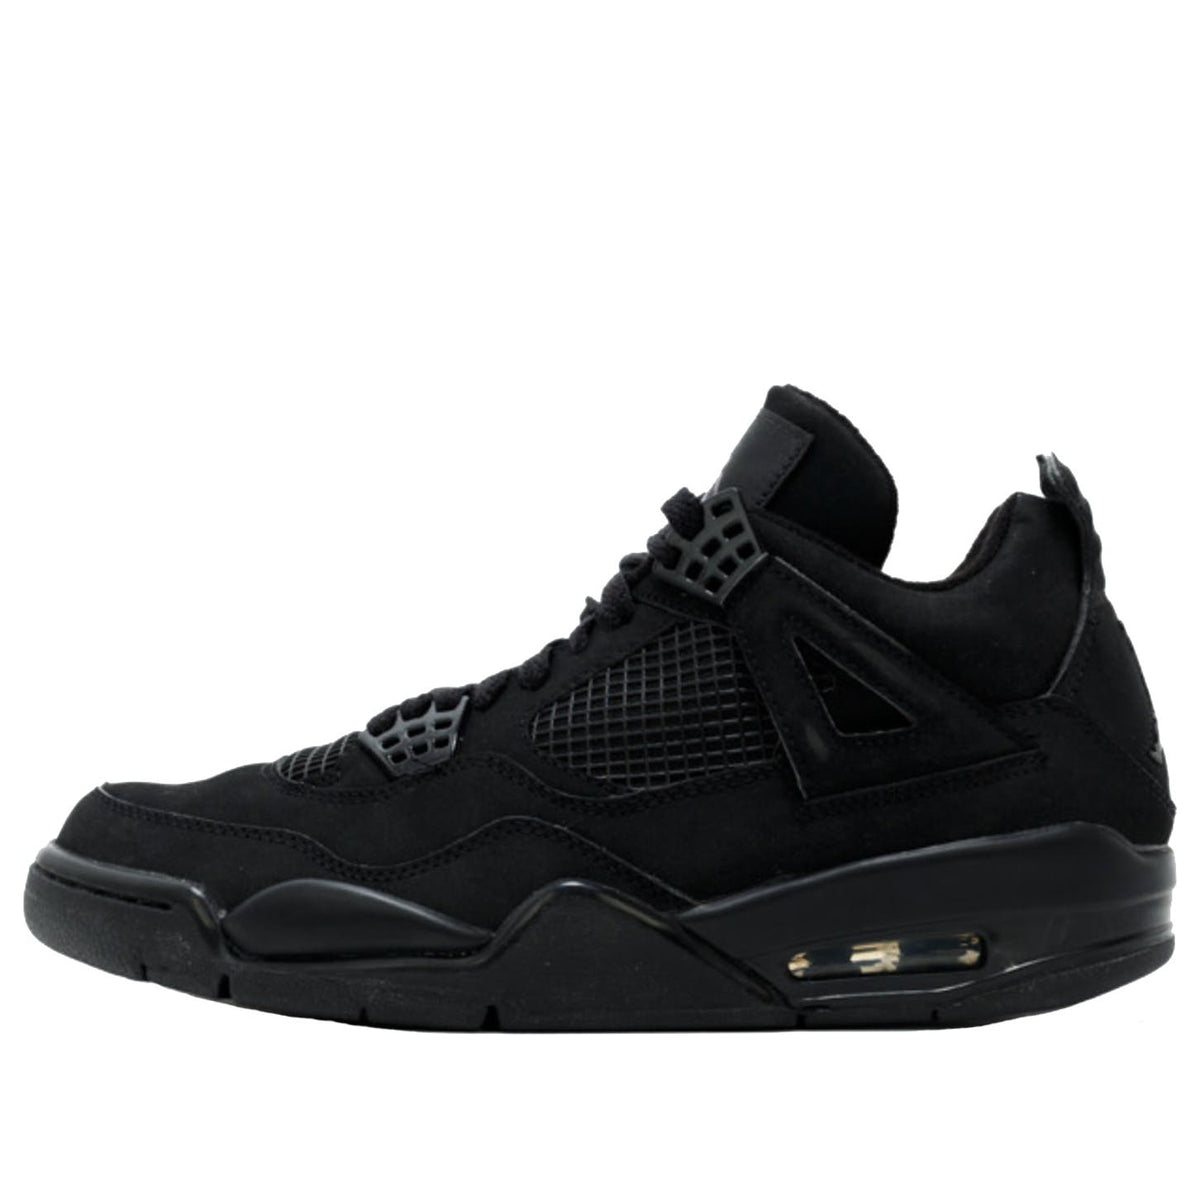 Shoe Box - Jordan 4 Retro Black Cat buy now get them